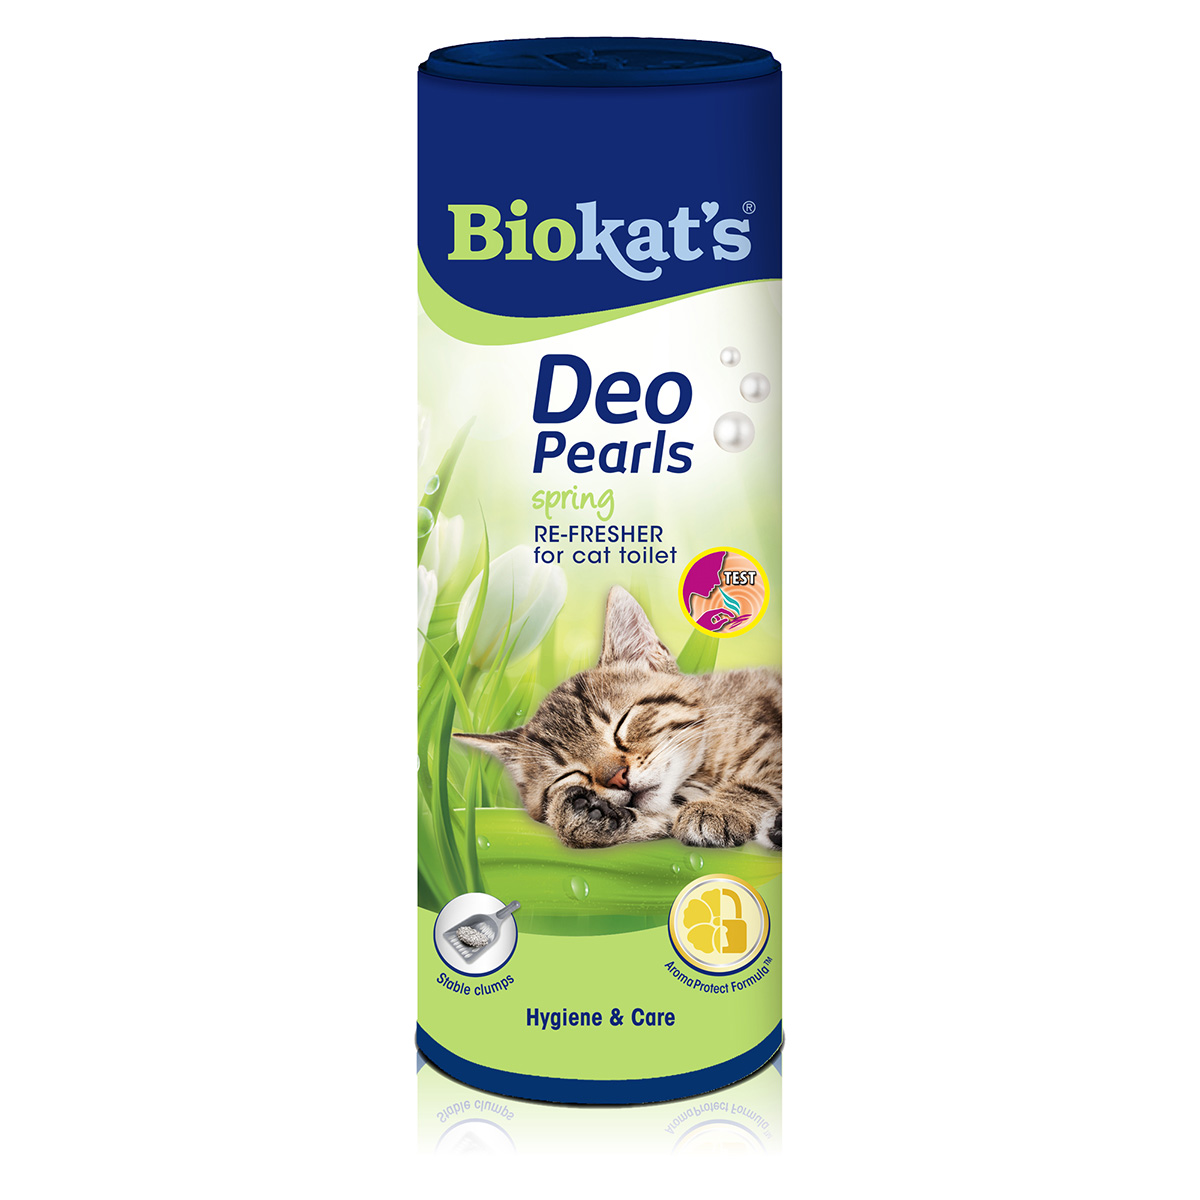 Biokat’s Deo Pearls Spring, 700 g